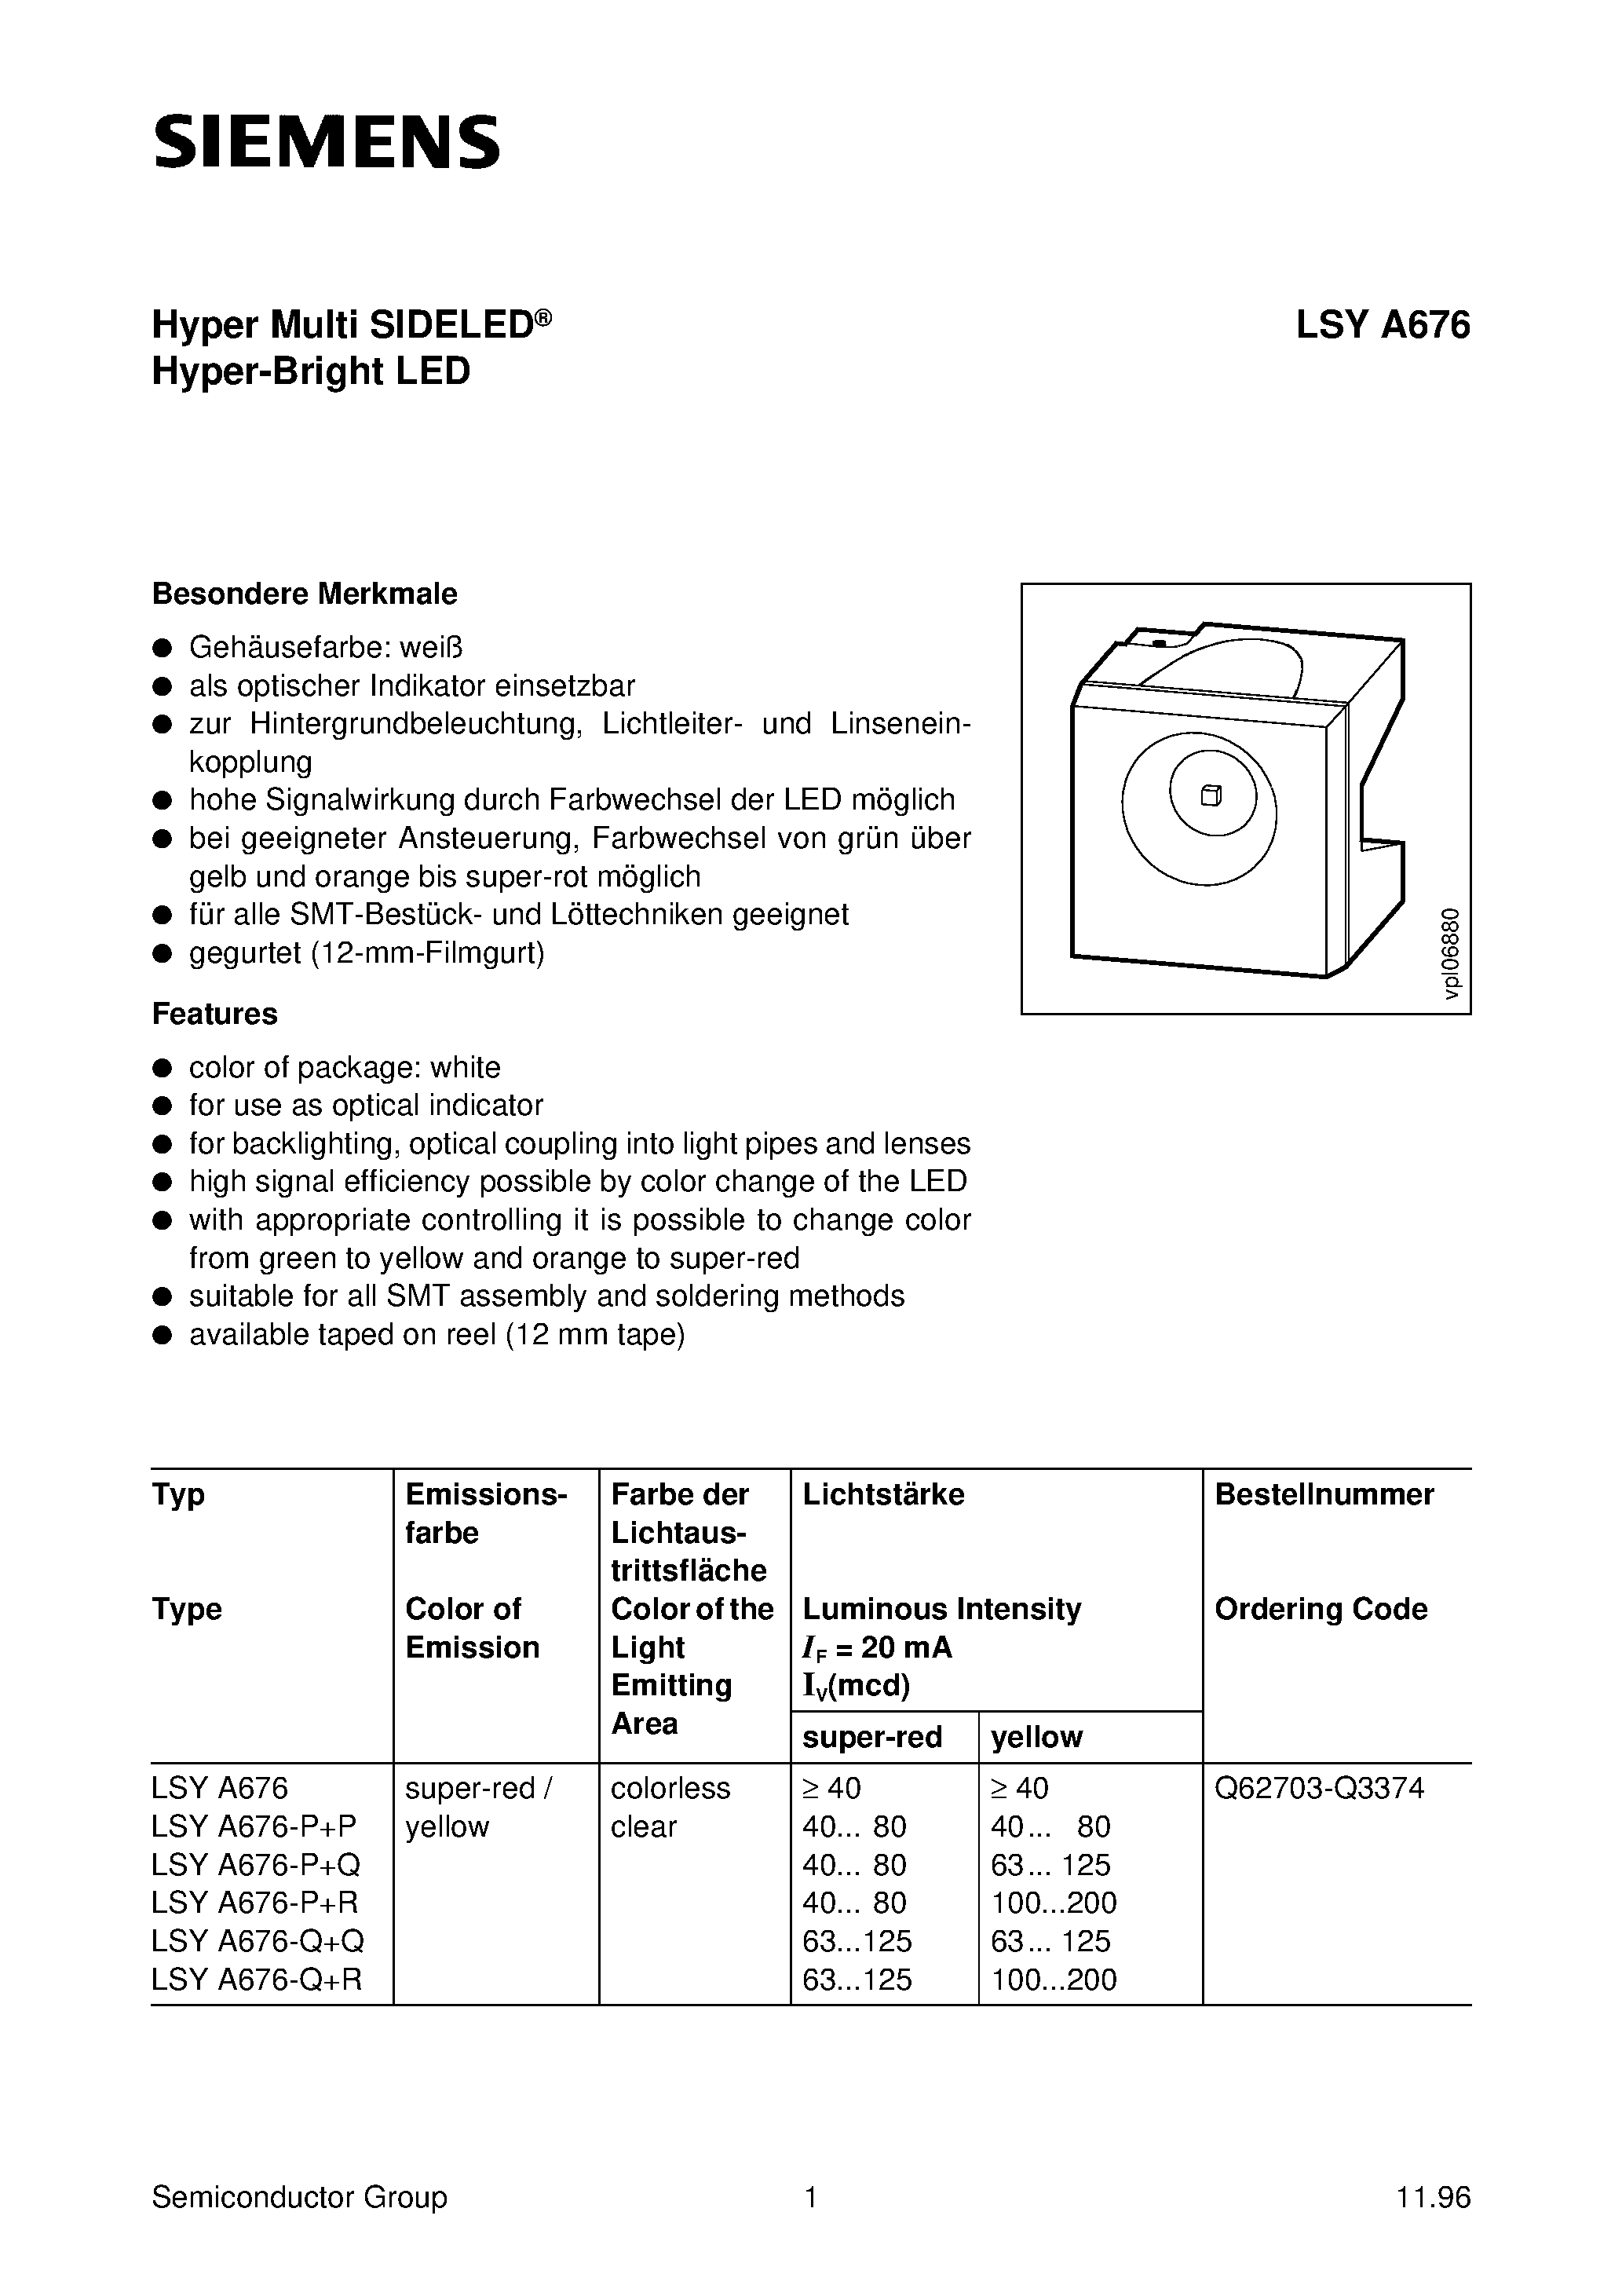 Даташит LSYA676-Q+R - Hyper Multi SIDELED Hyper-Bright LED страница 1